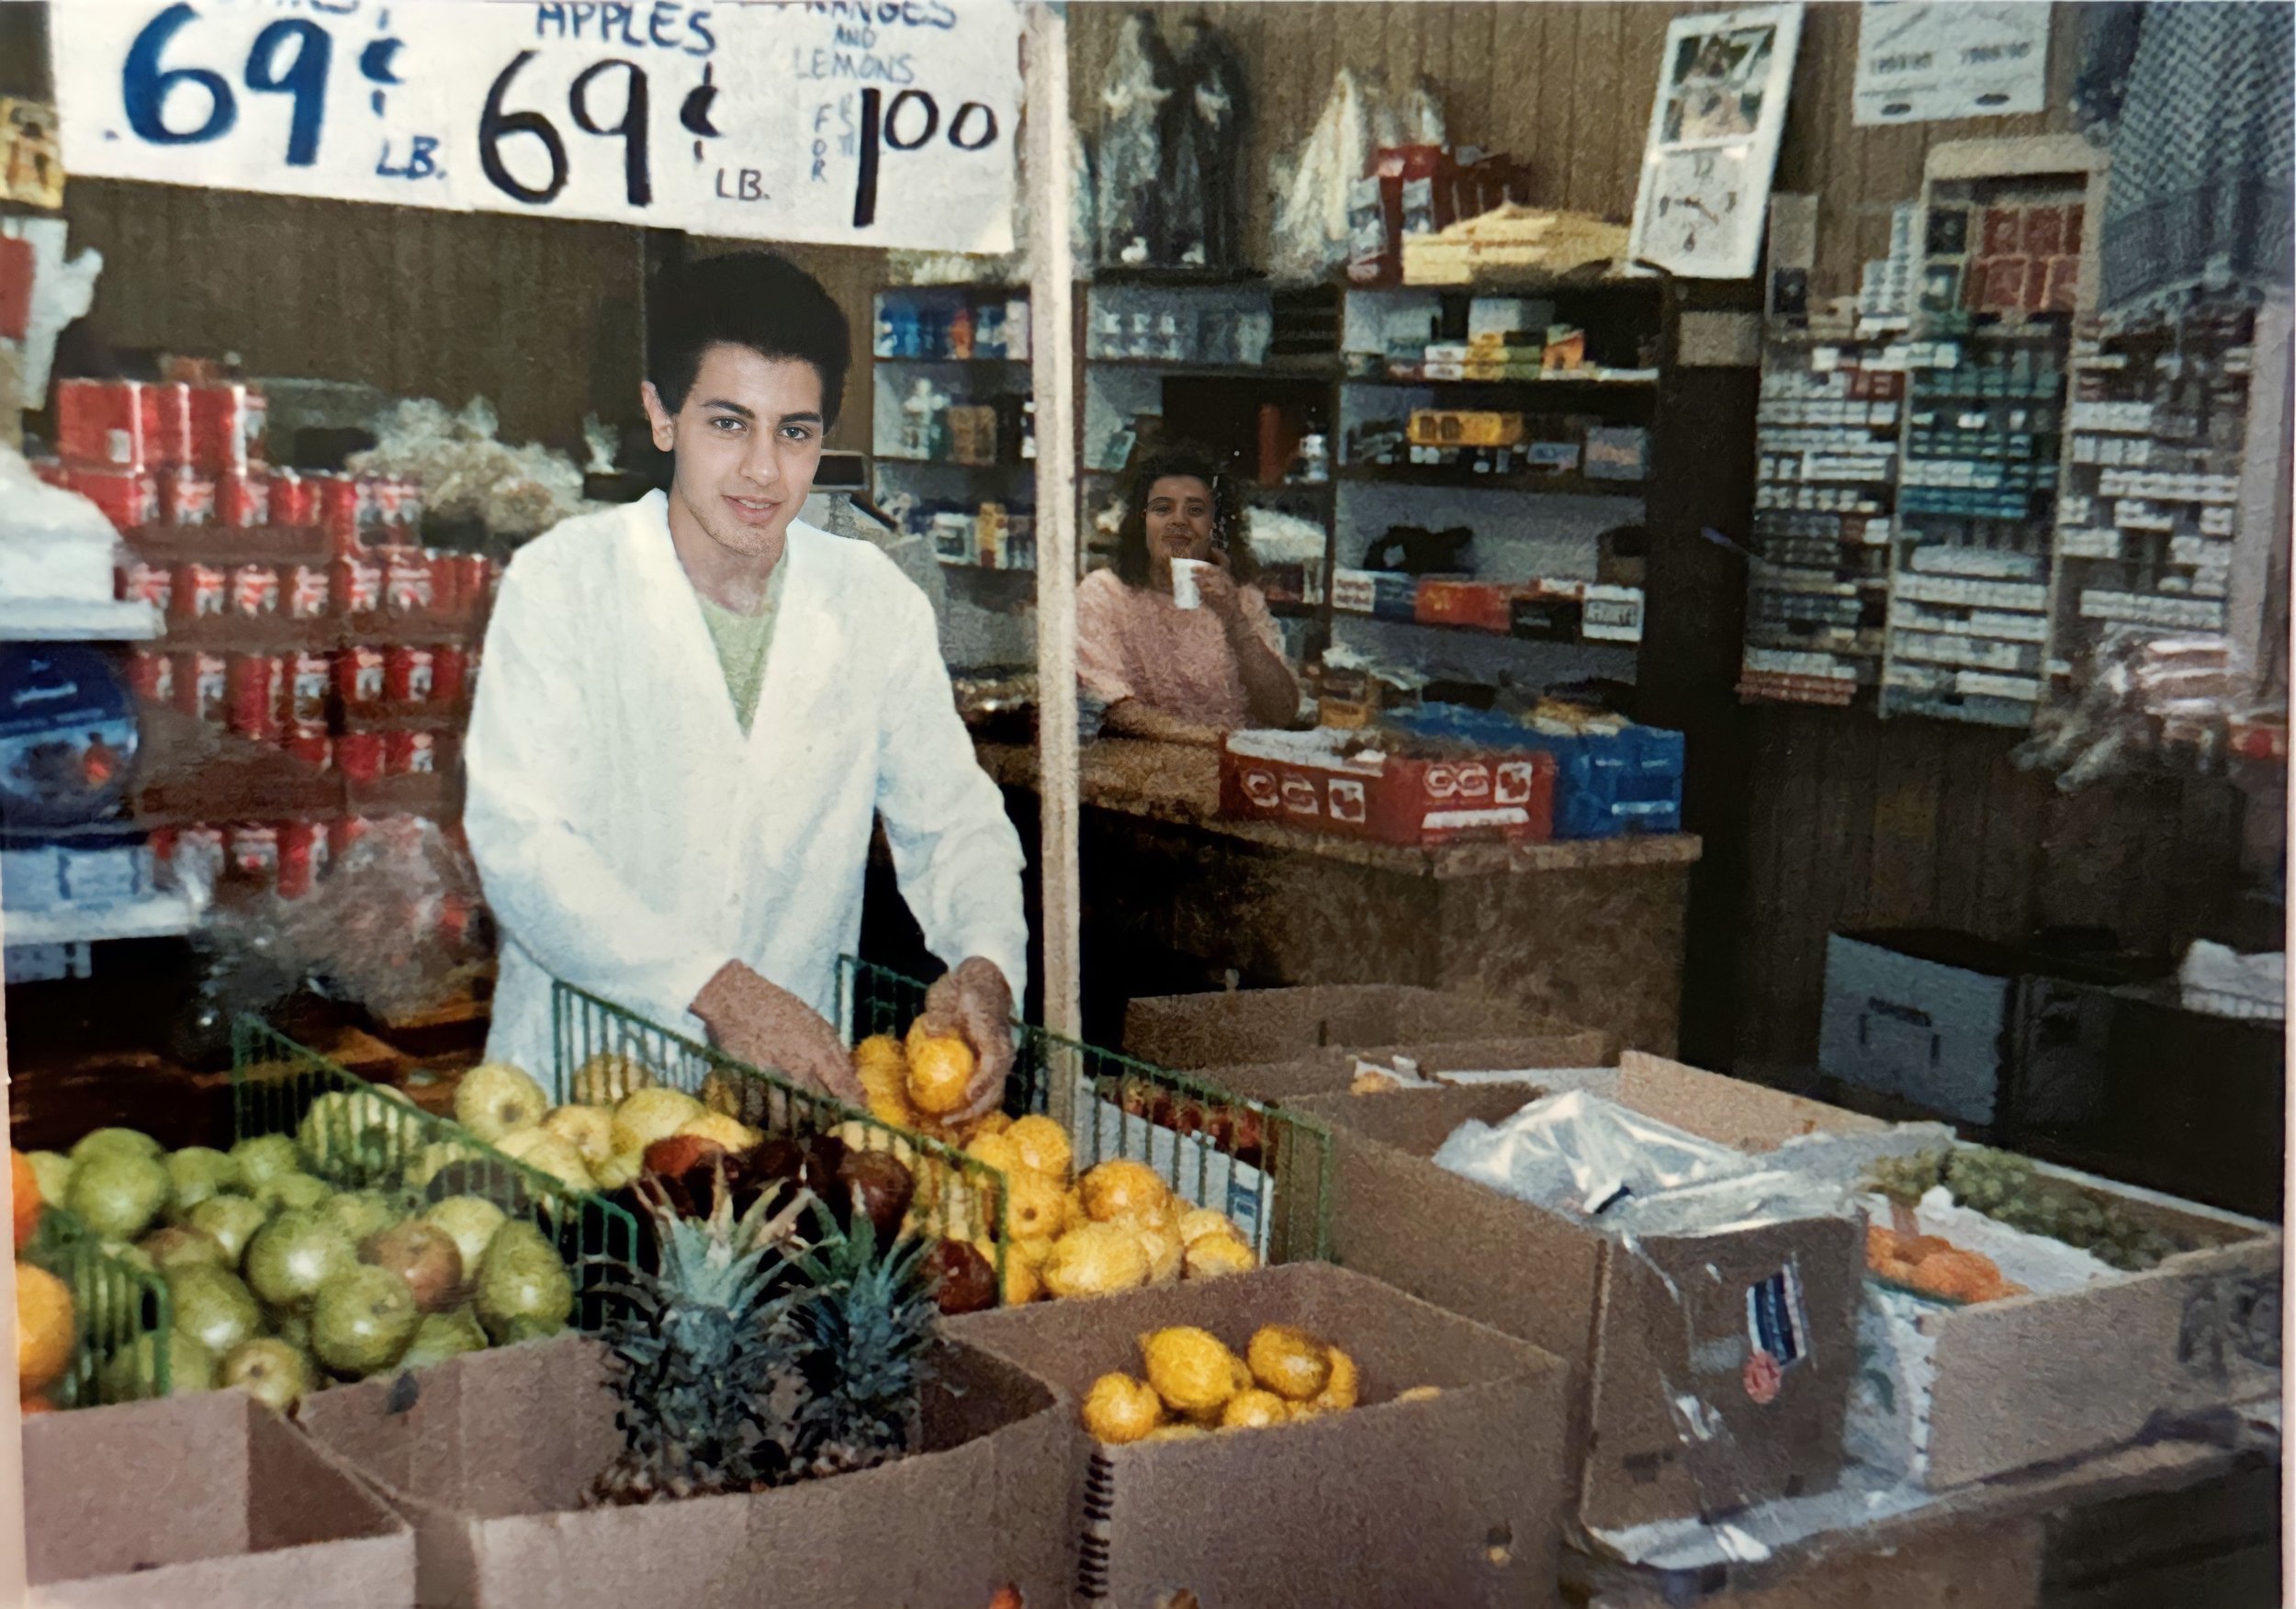  Kevin Boji arranges fruit while a cashier looks on. 